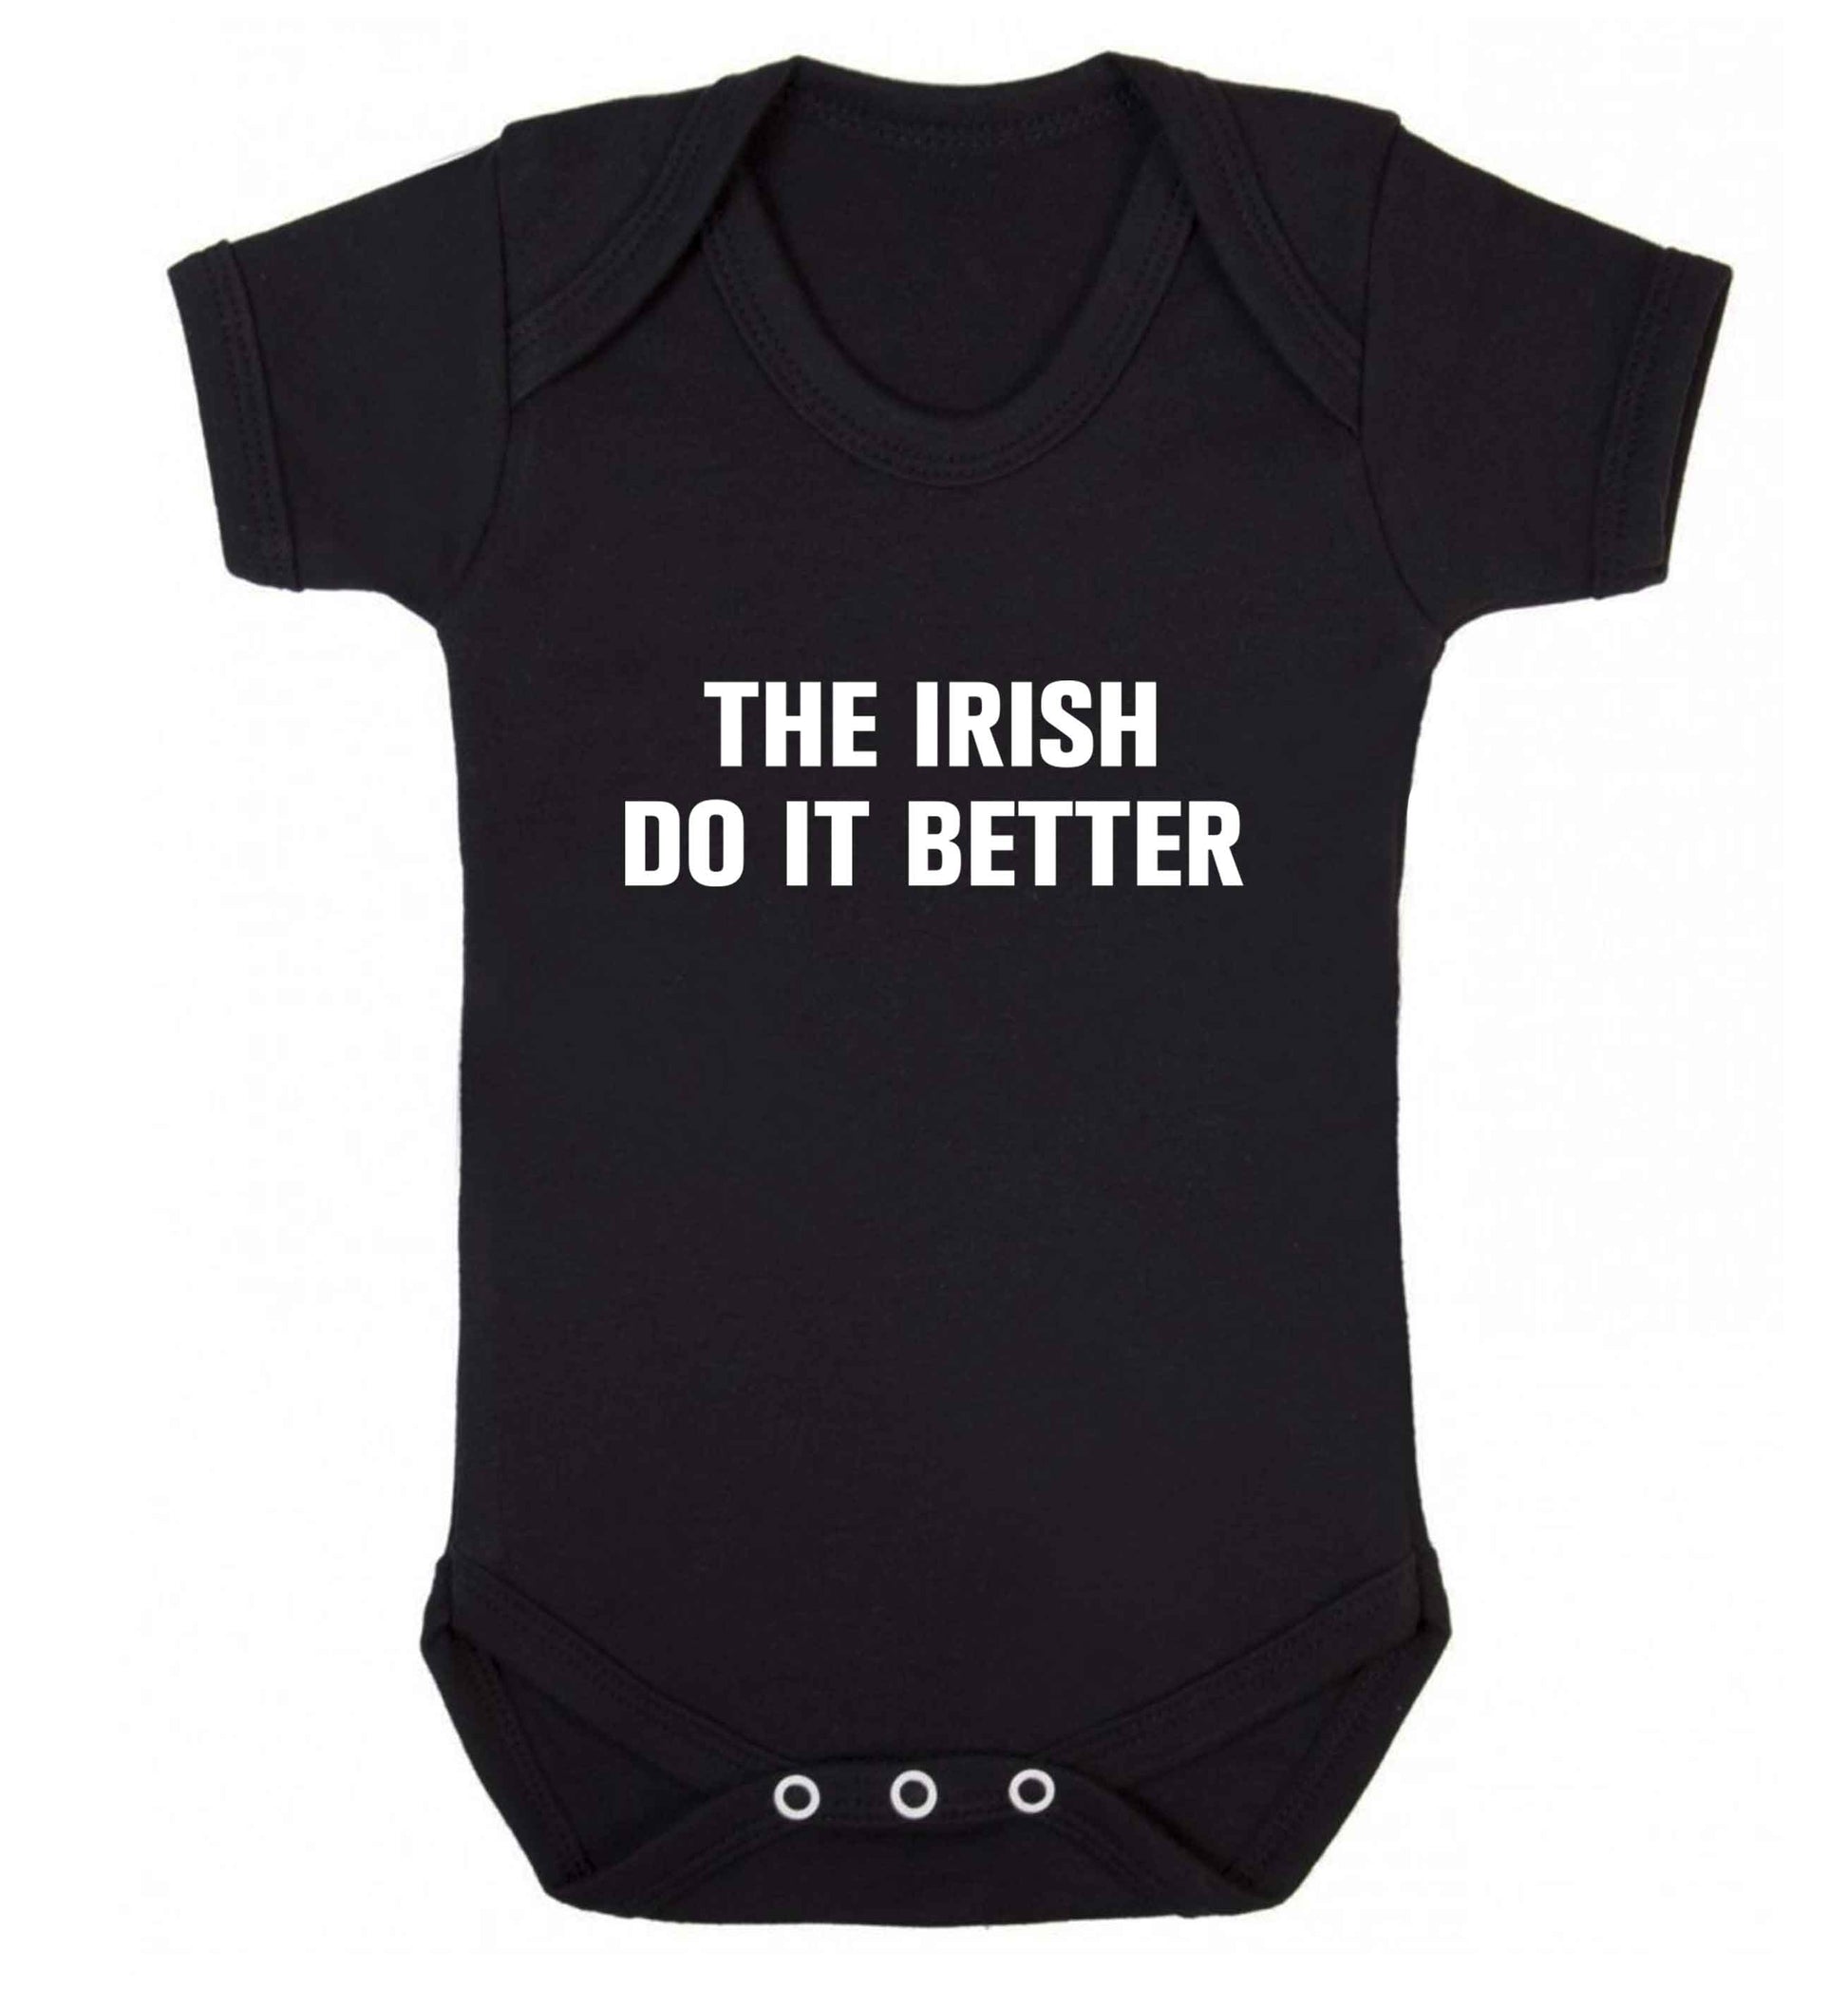 The Irish do it better baby vest black 18-24 months